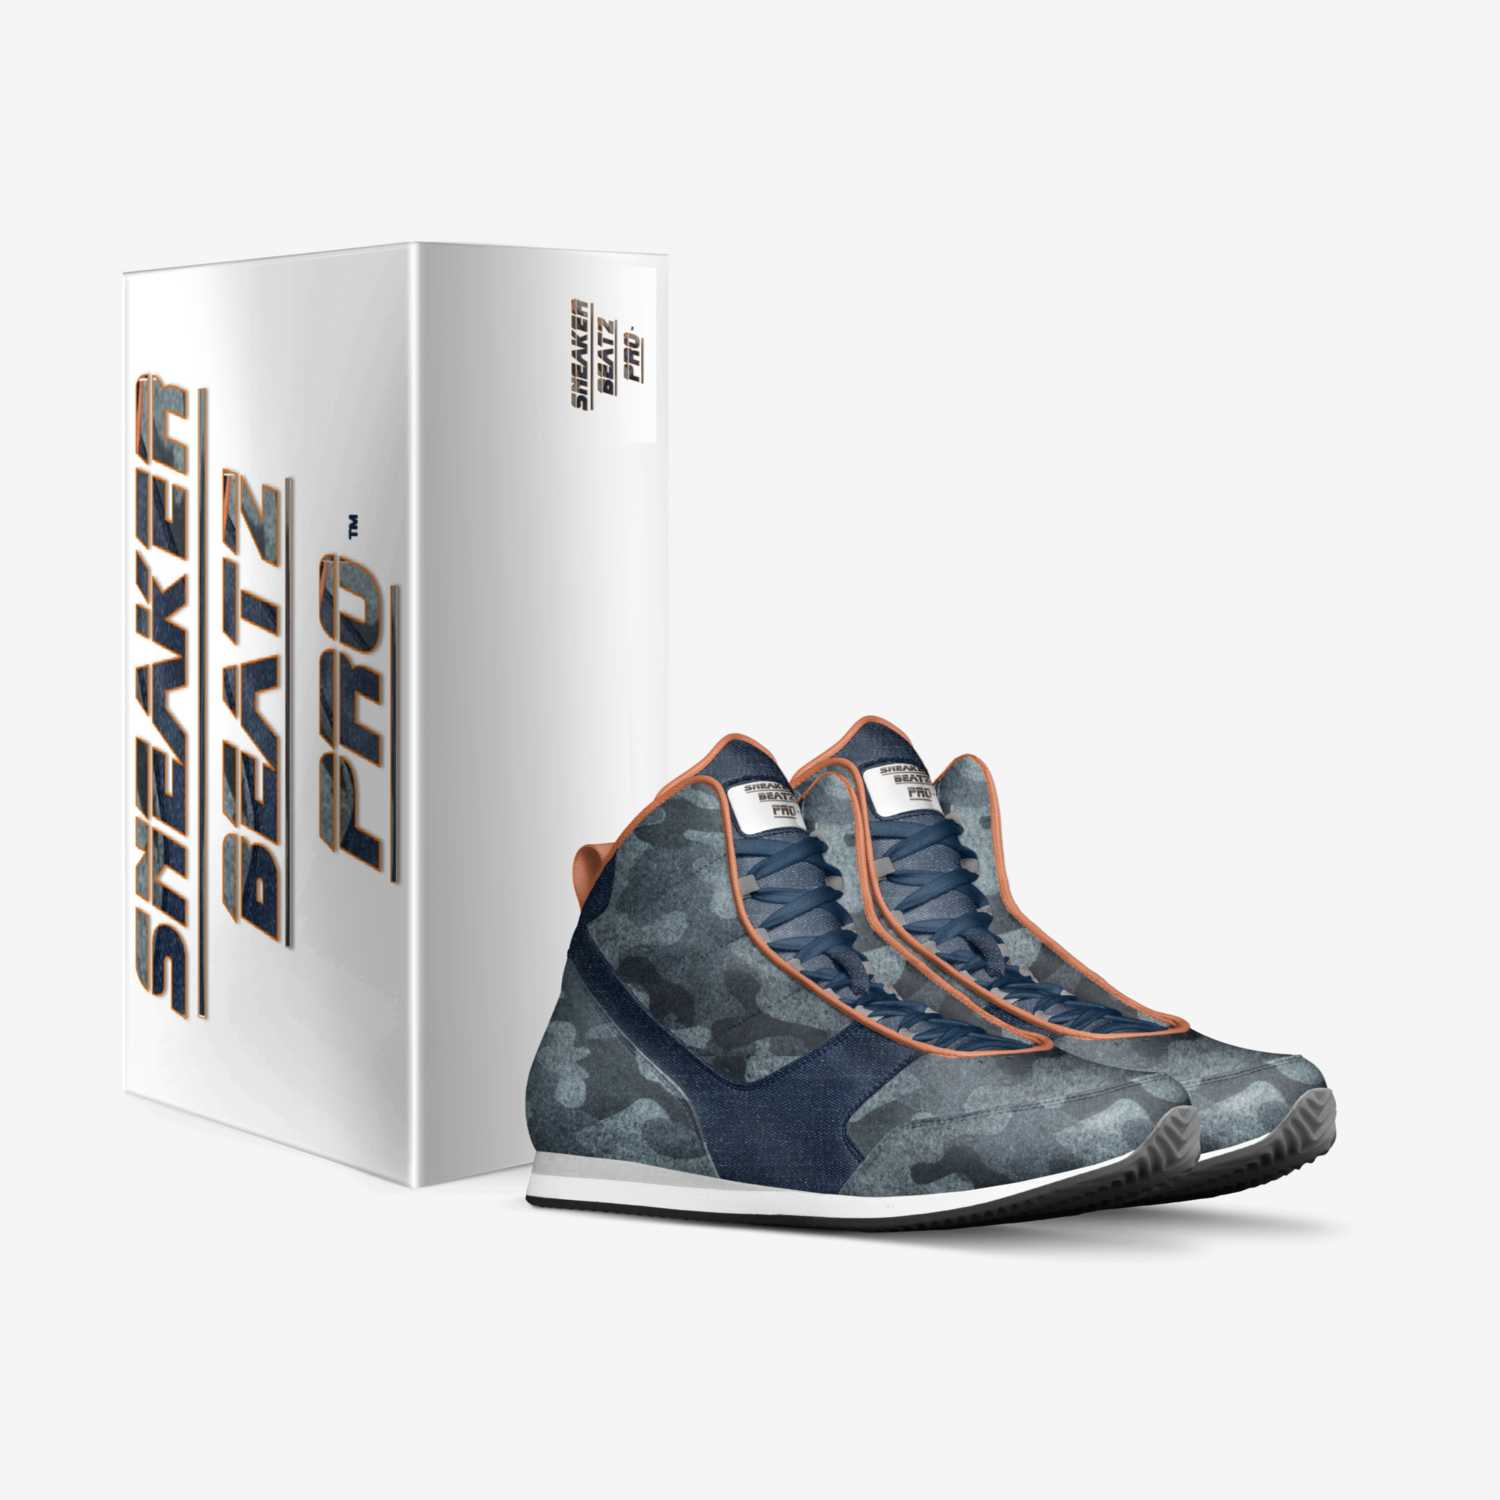 RUN TEK custom made in Italy shoes by Jimmy Dorvil | Box view